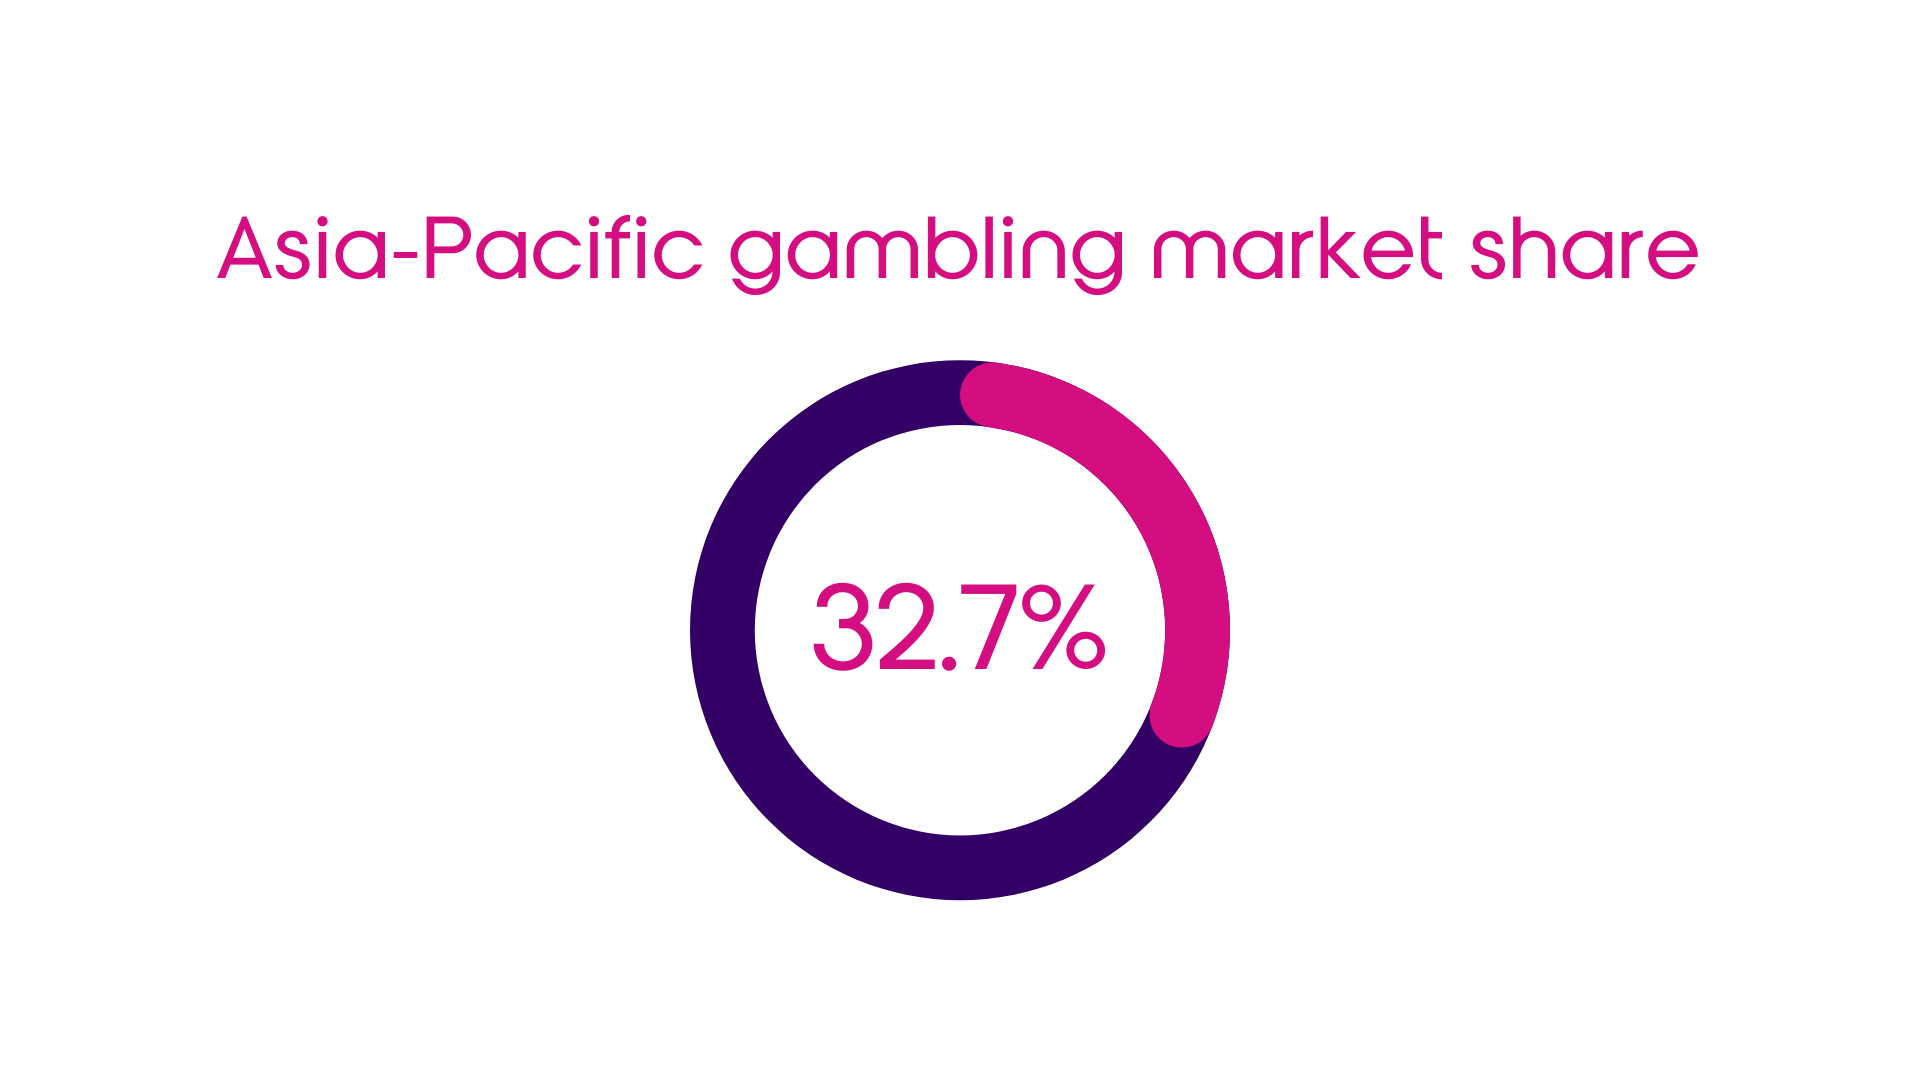 Global Gambling Industry: Asia-Pacific Gambling Market Share